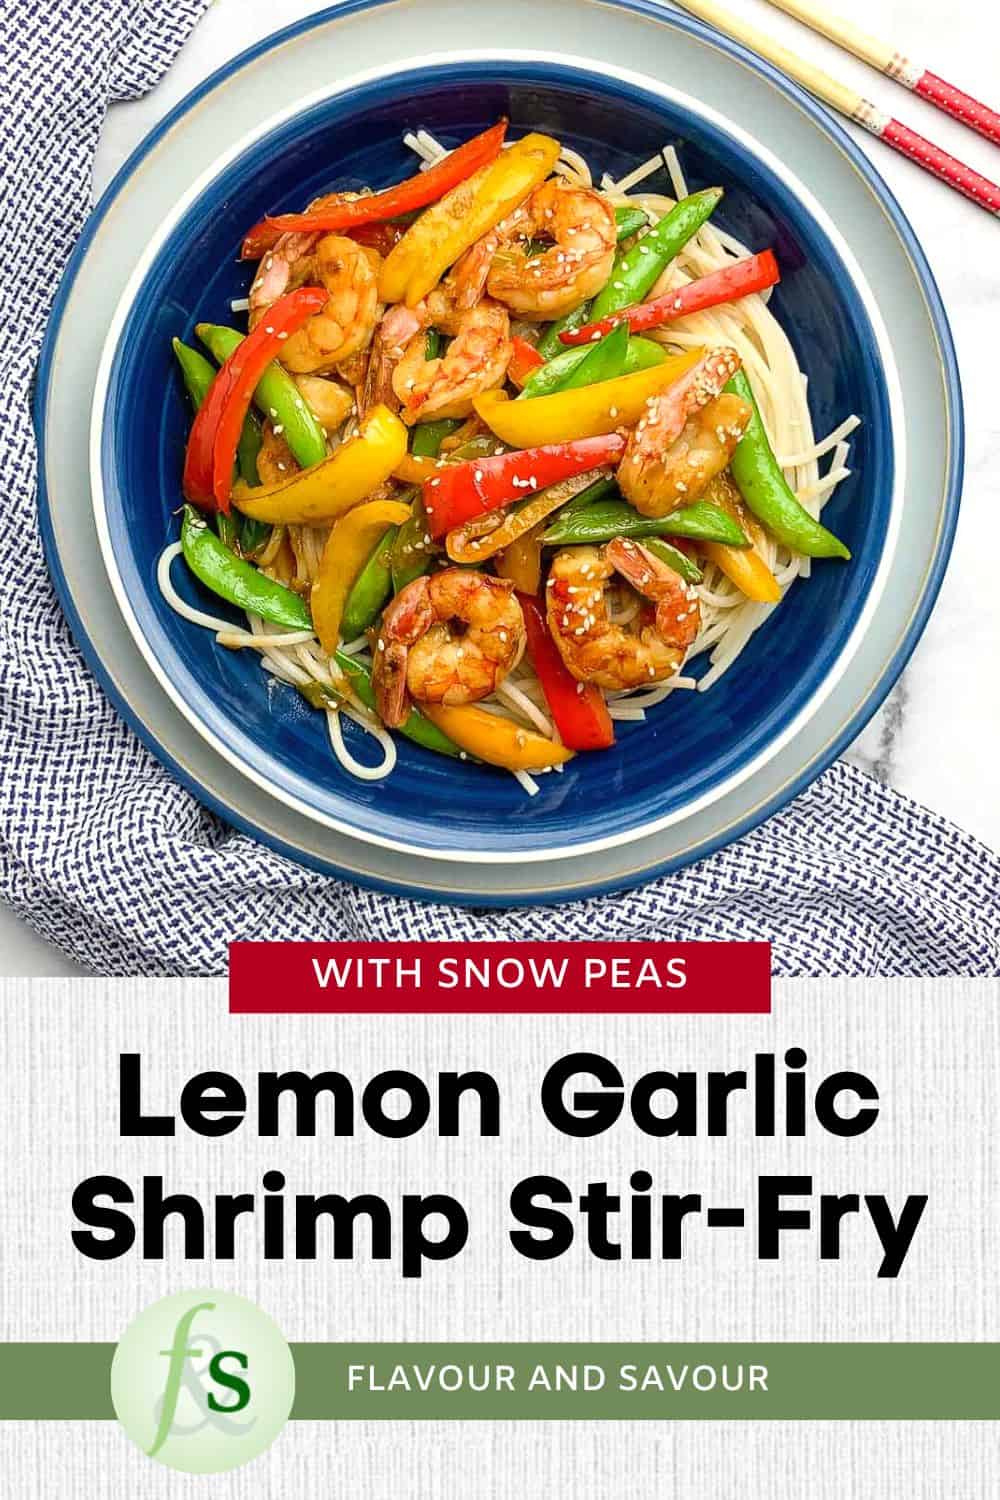 Image with text for lemon garlic shrimp stir fry with snow peas.